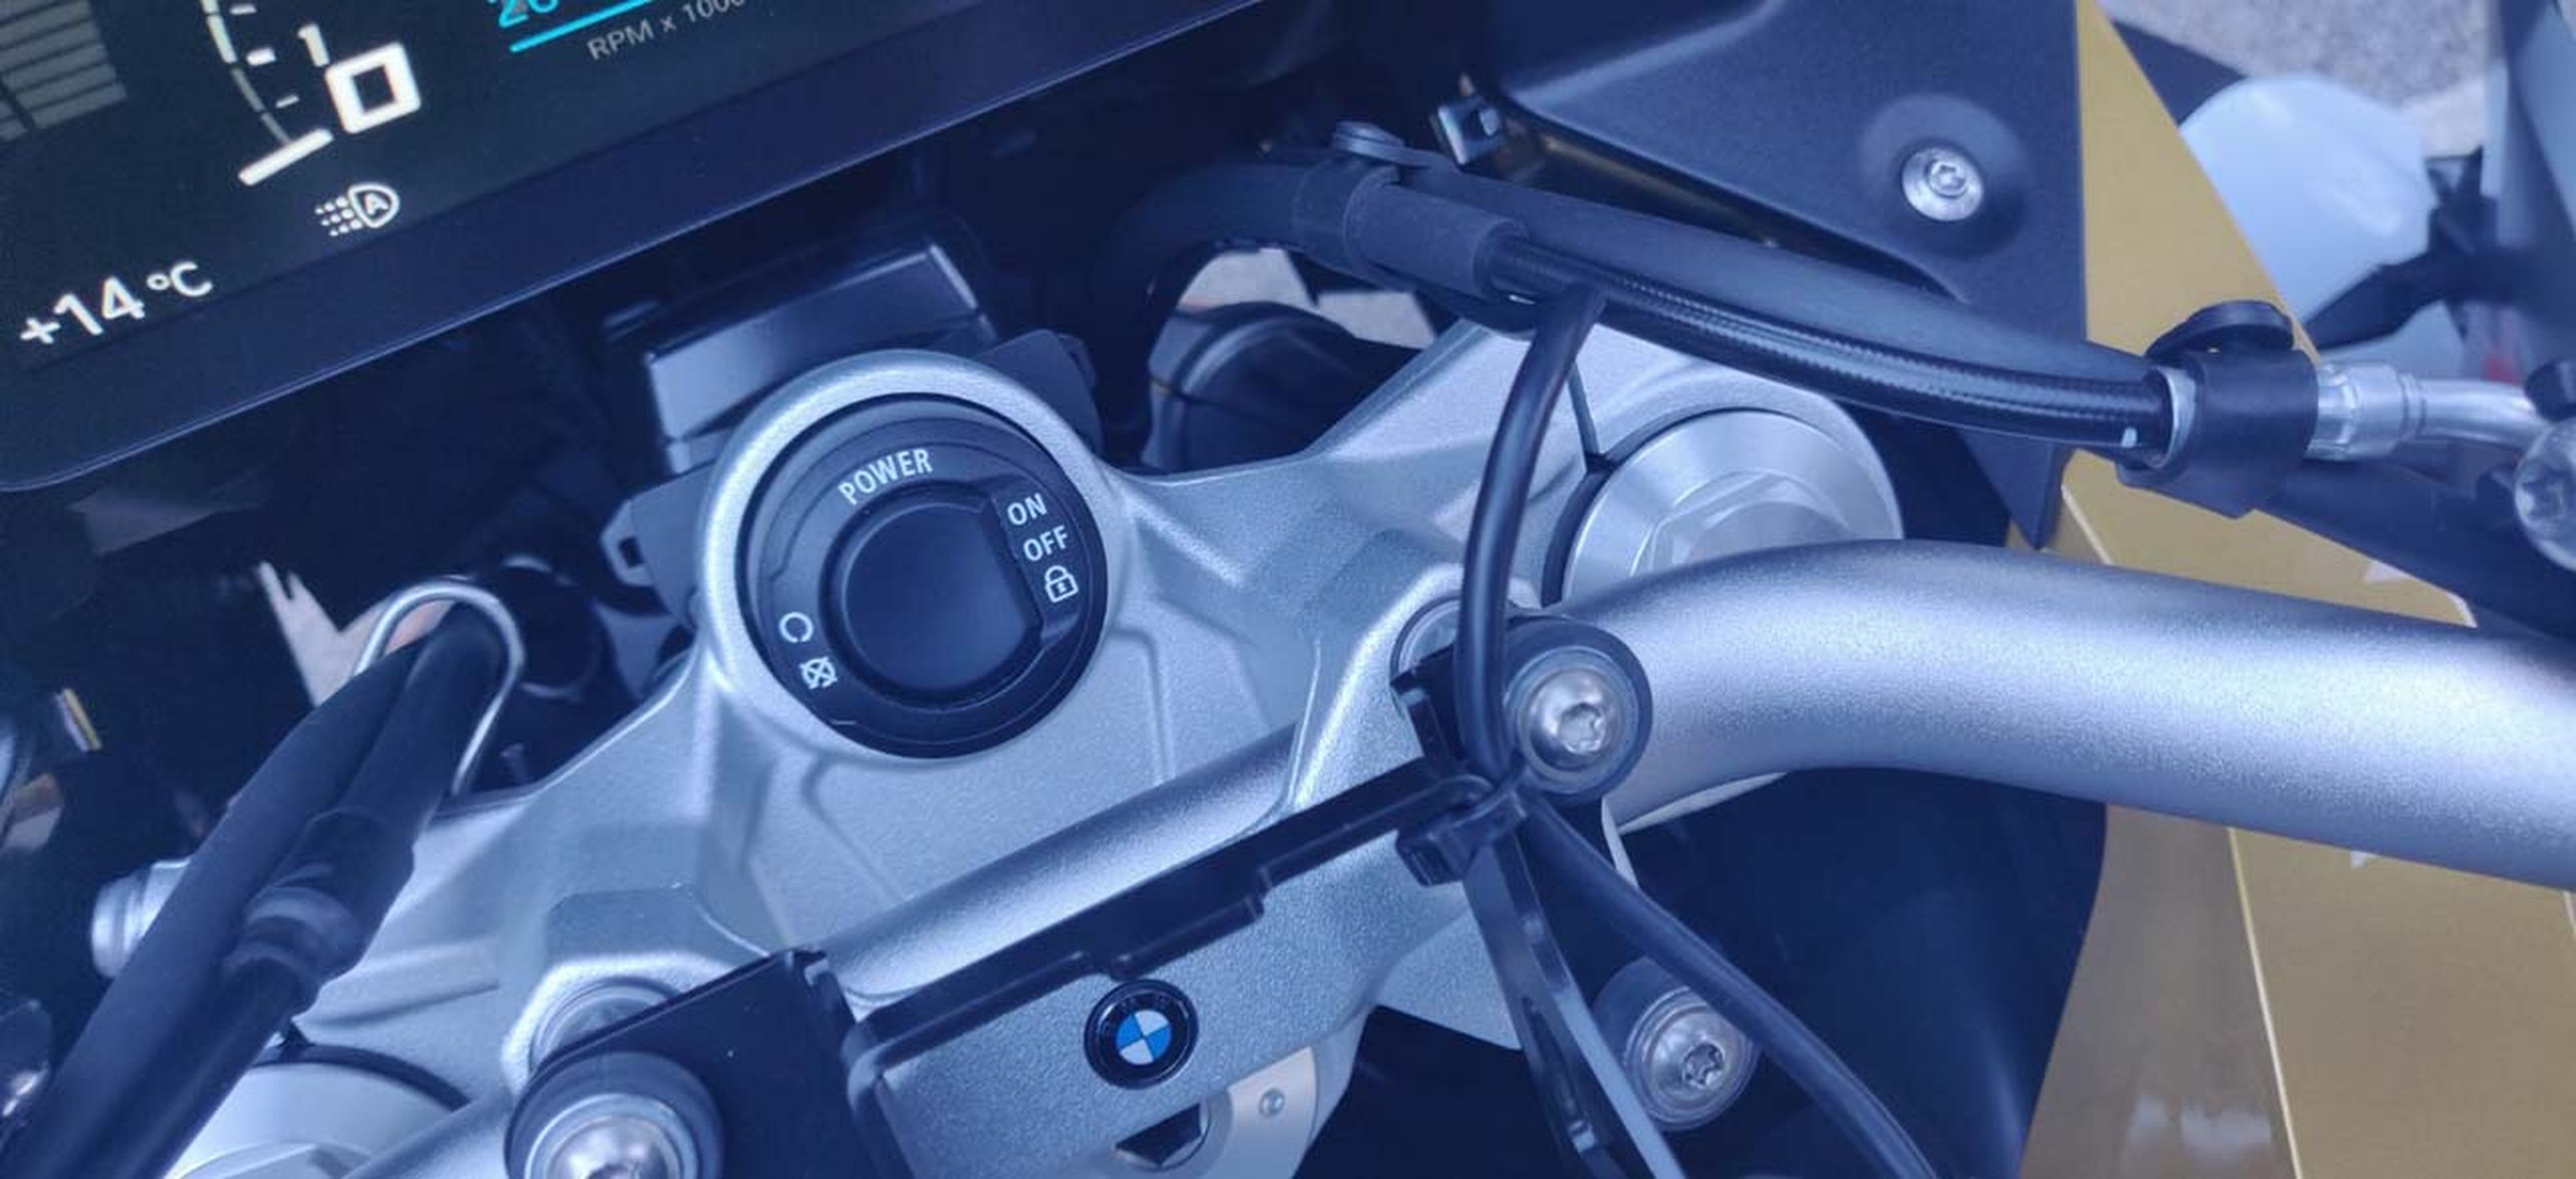 Prueba BMW F900R 2020